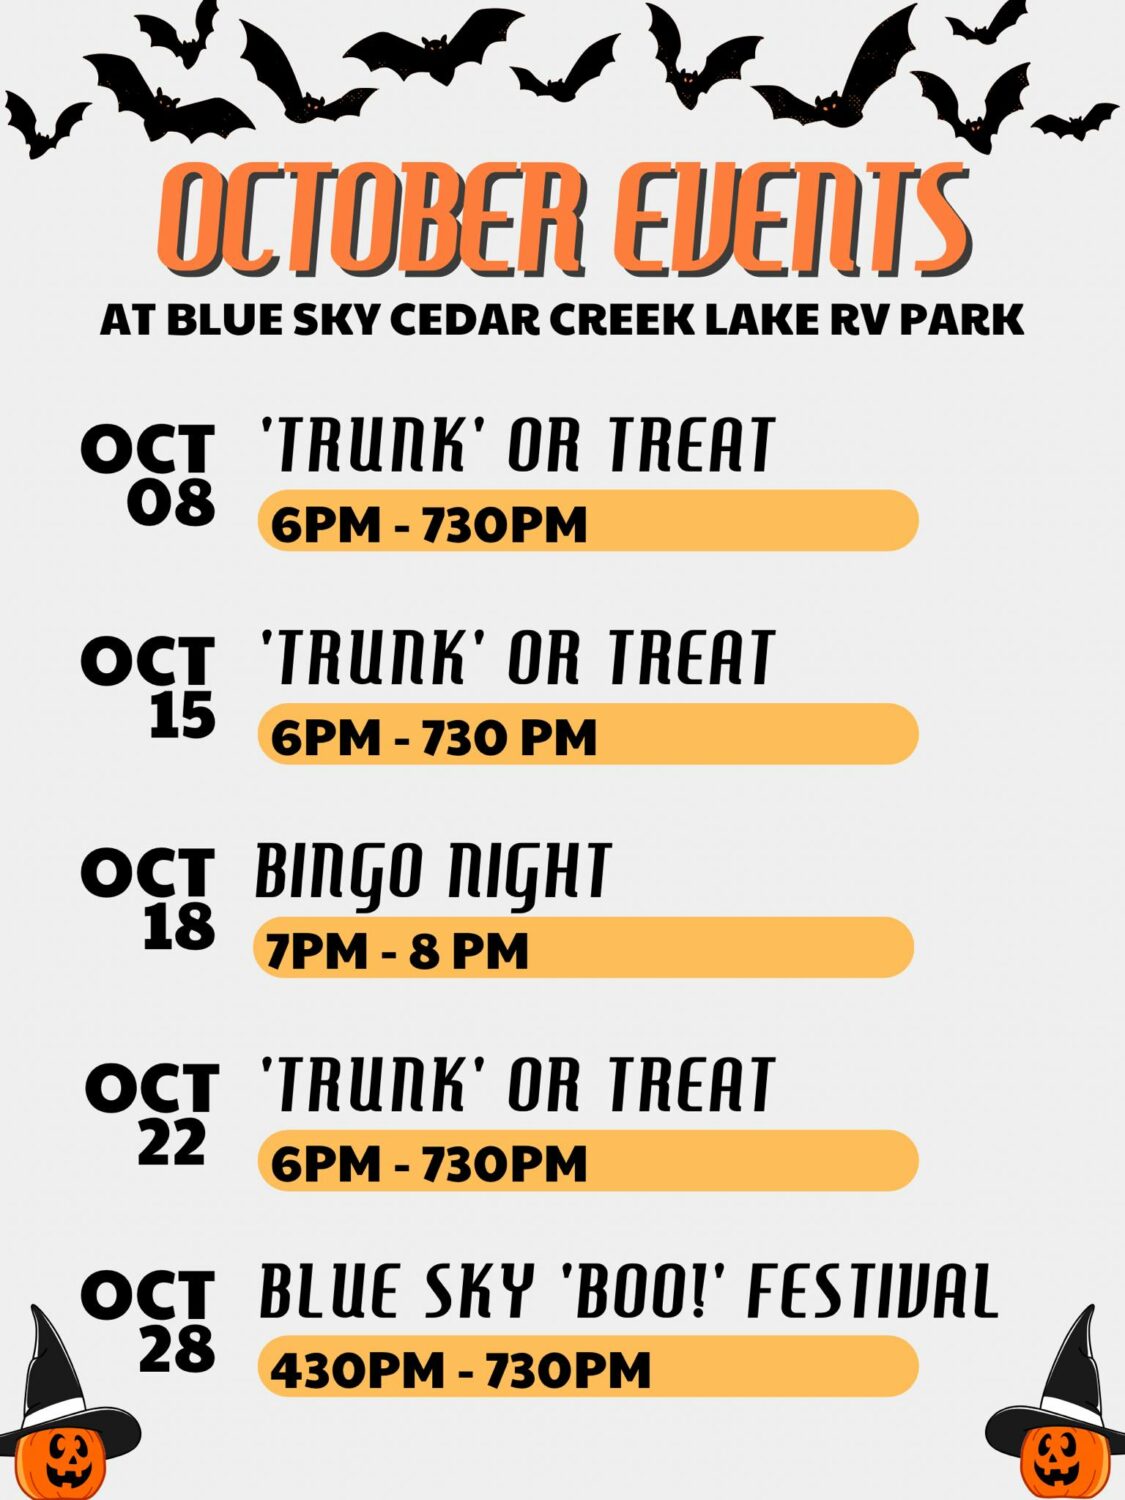 October Events At Blue Sky Cedar Creek Lake RV Park 2 October 22 2 CedarCreekLake.Online